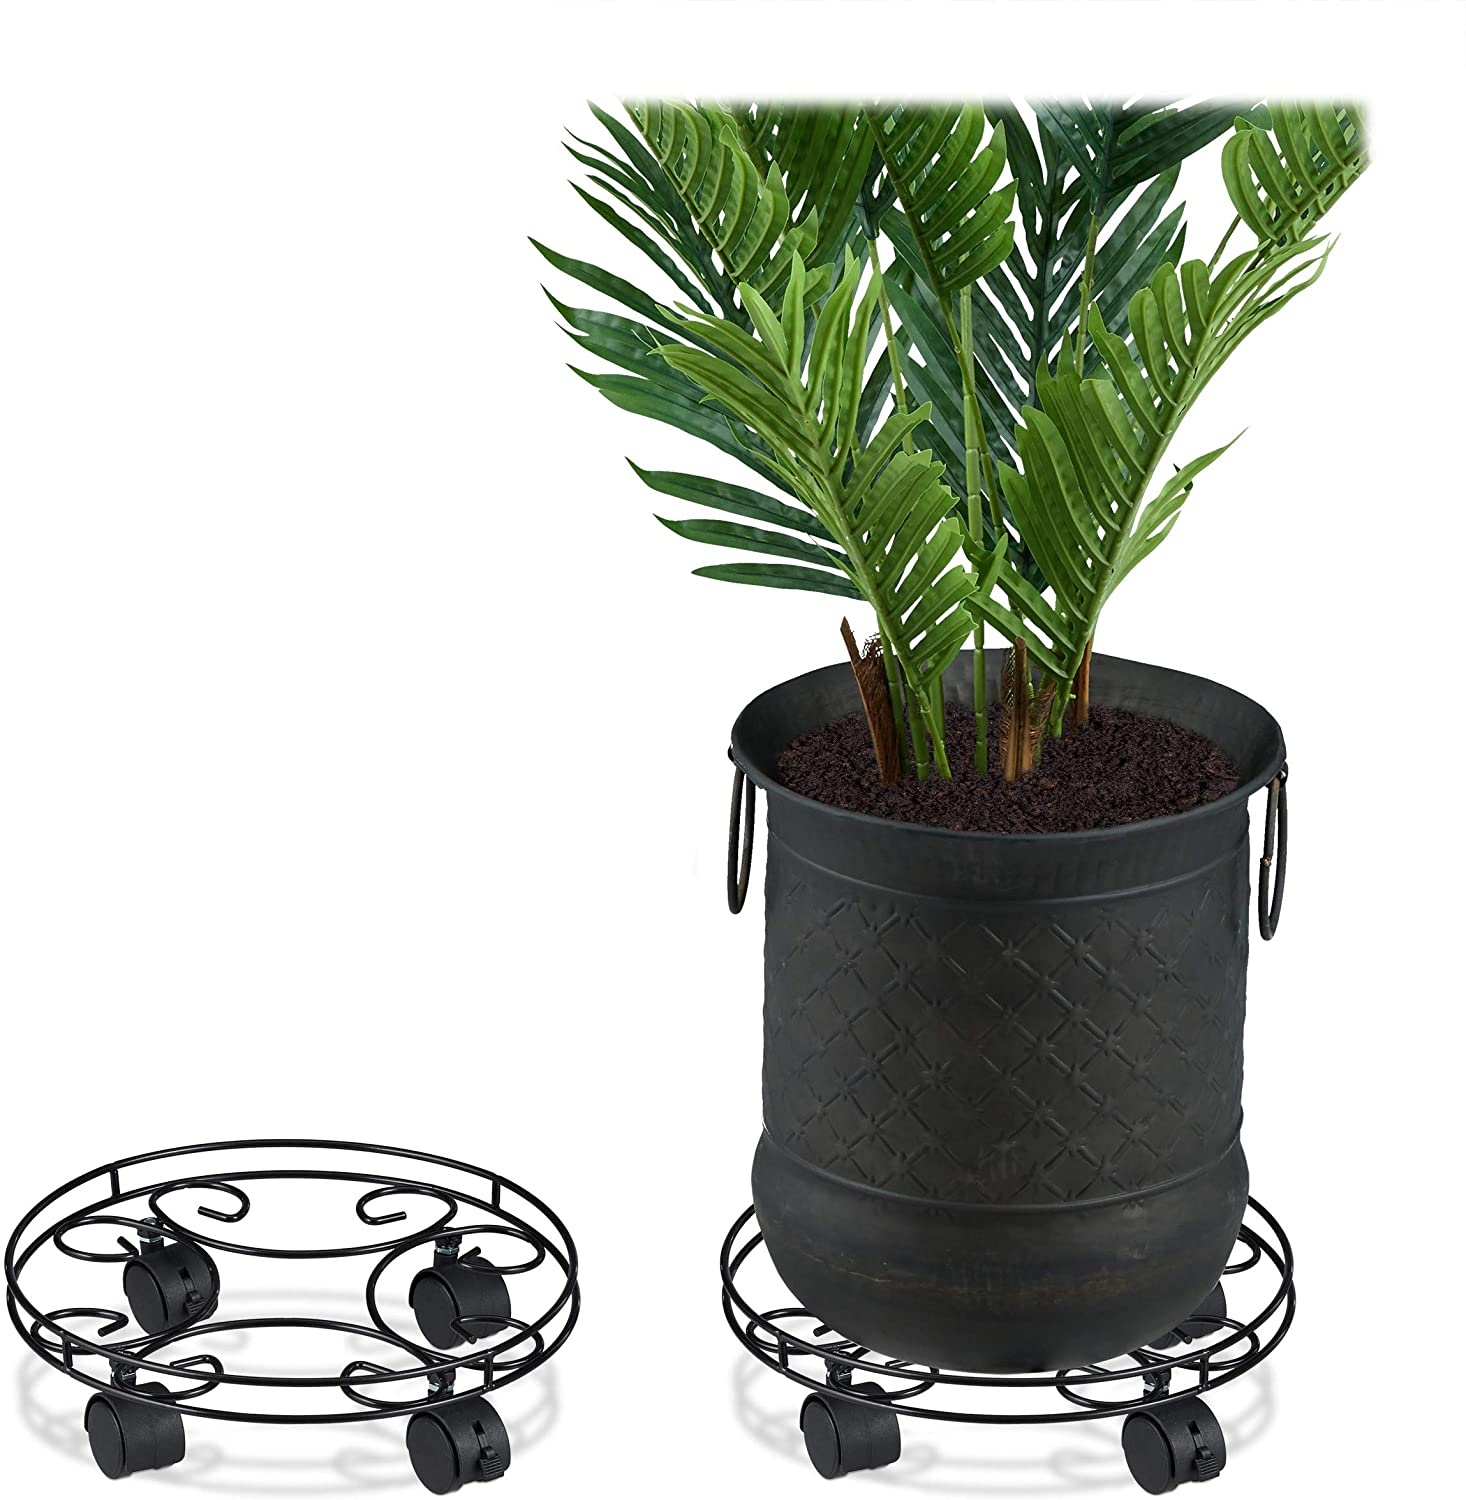 Relaxdays Plant Roller, Set Of 2, Round, Indoor & Outdoor Brake, Rolling Co